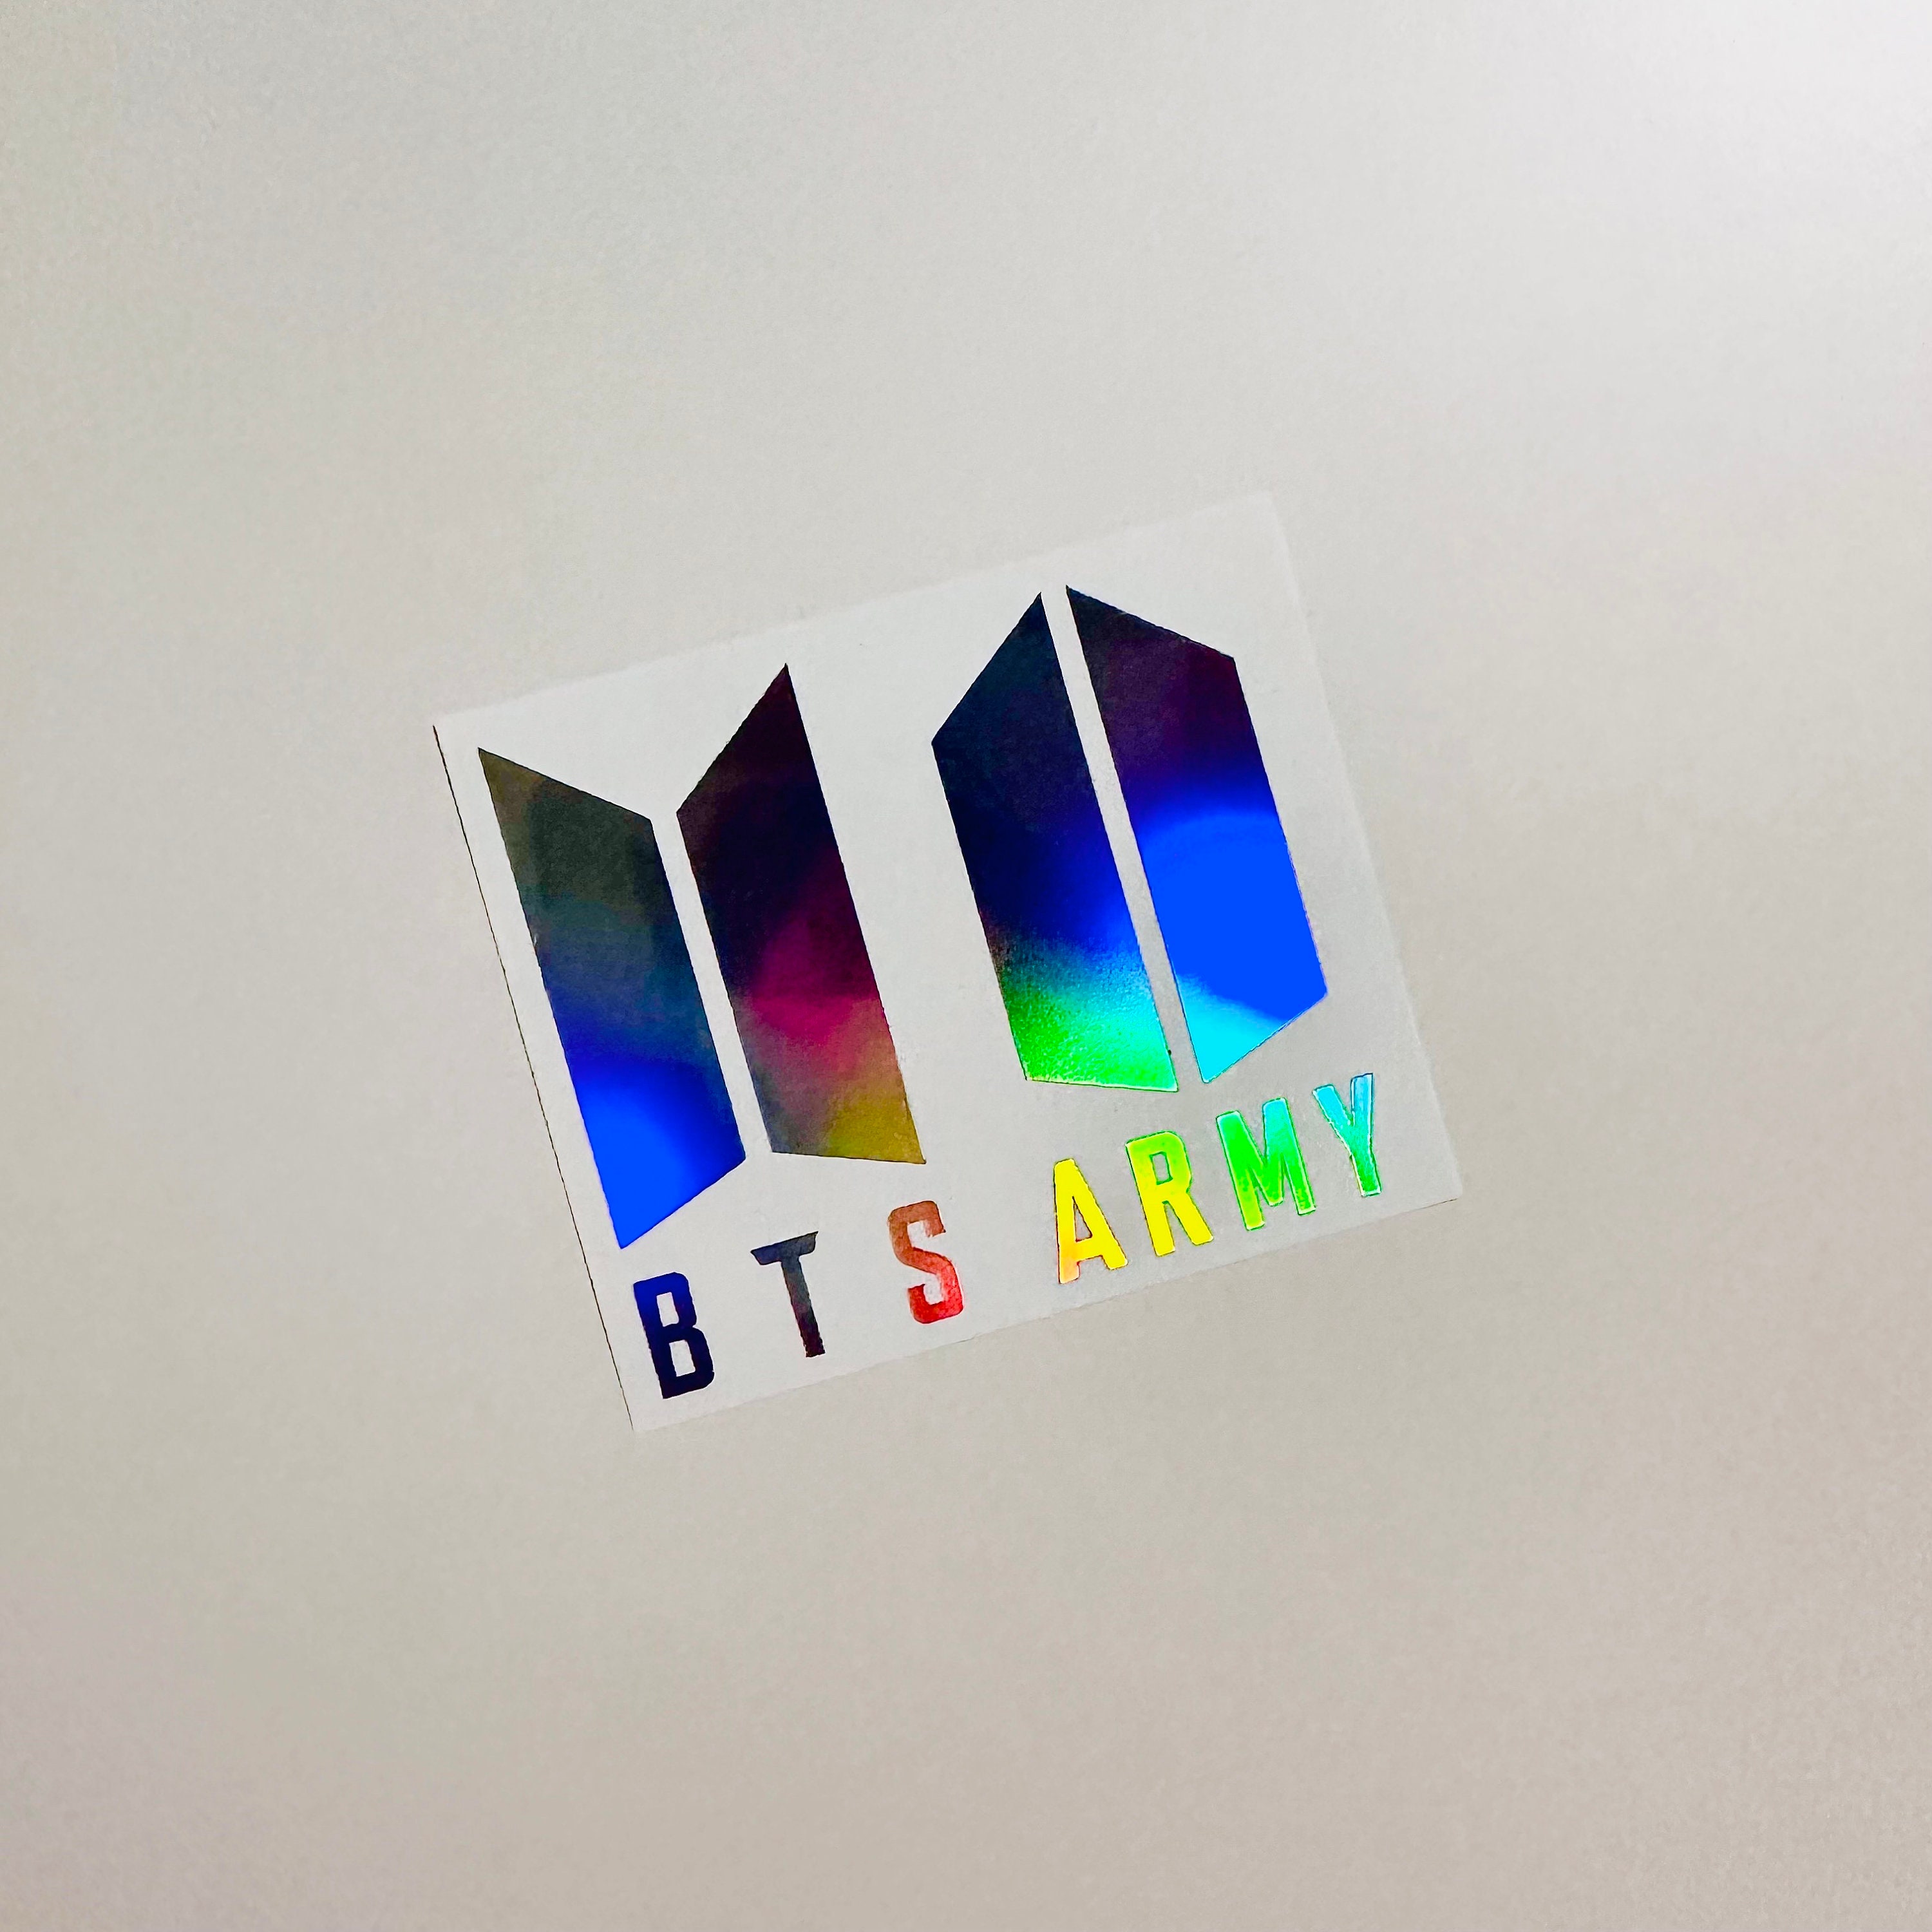 BTS + Army Logo Sticker Vinyl Decal Great for Car Windows, Laptops